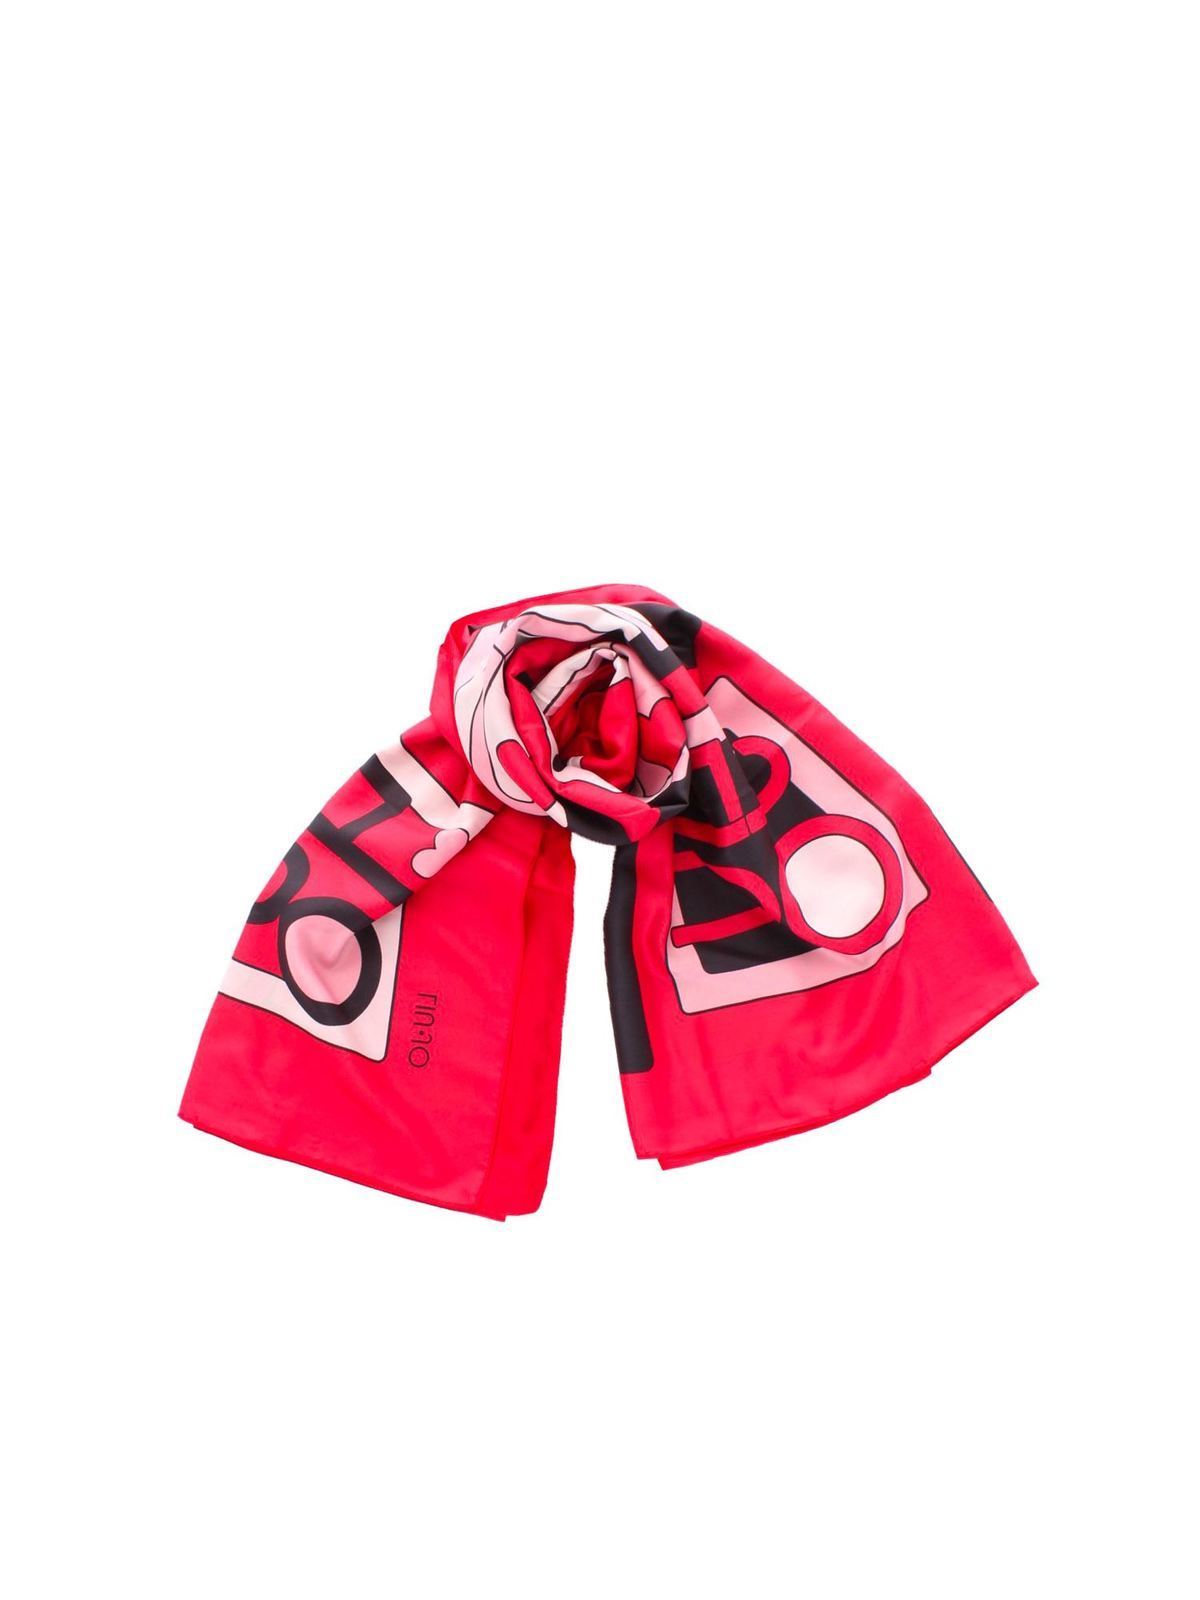 Liu Jo - Geometric logo scarf in red - scarves - 2A1025T030091664